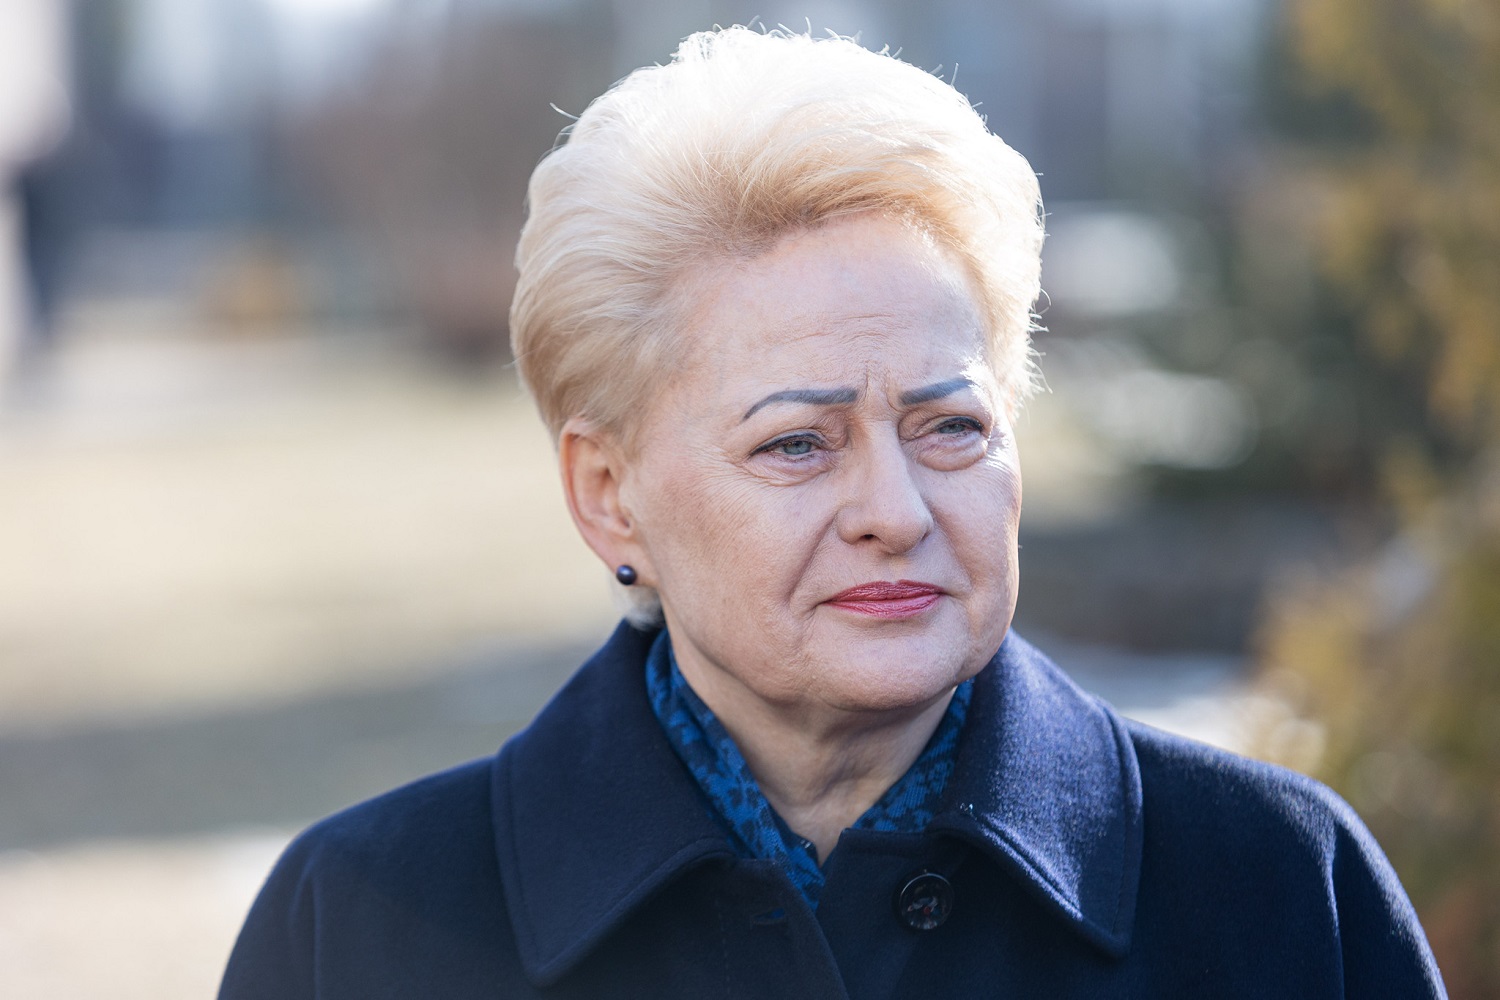 D. Grybauskaitei skirta prestižinė „Point Alpha“ premija